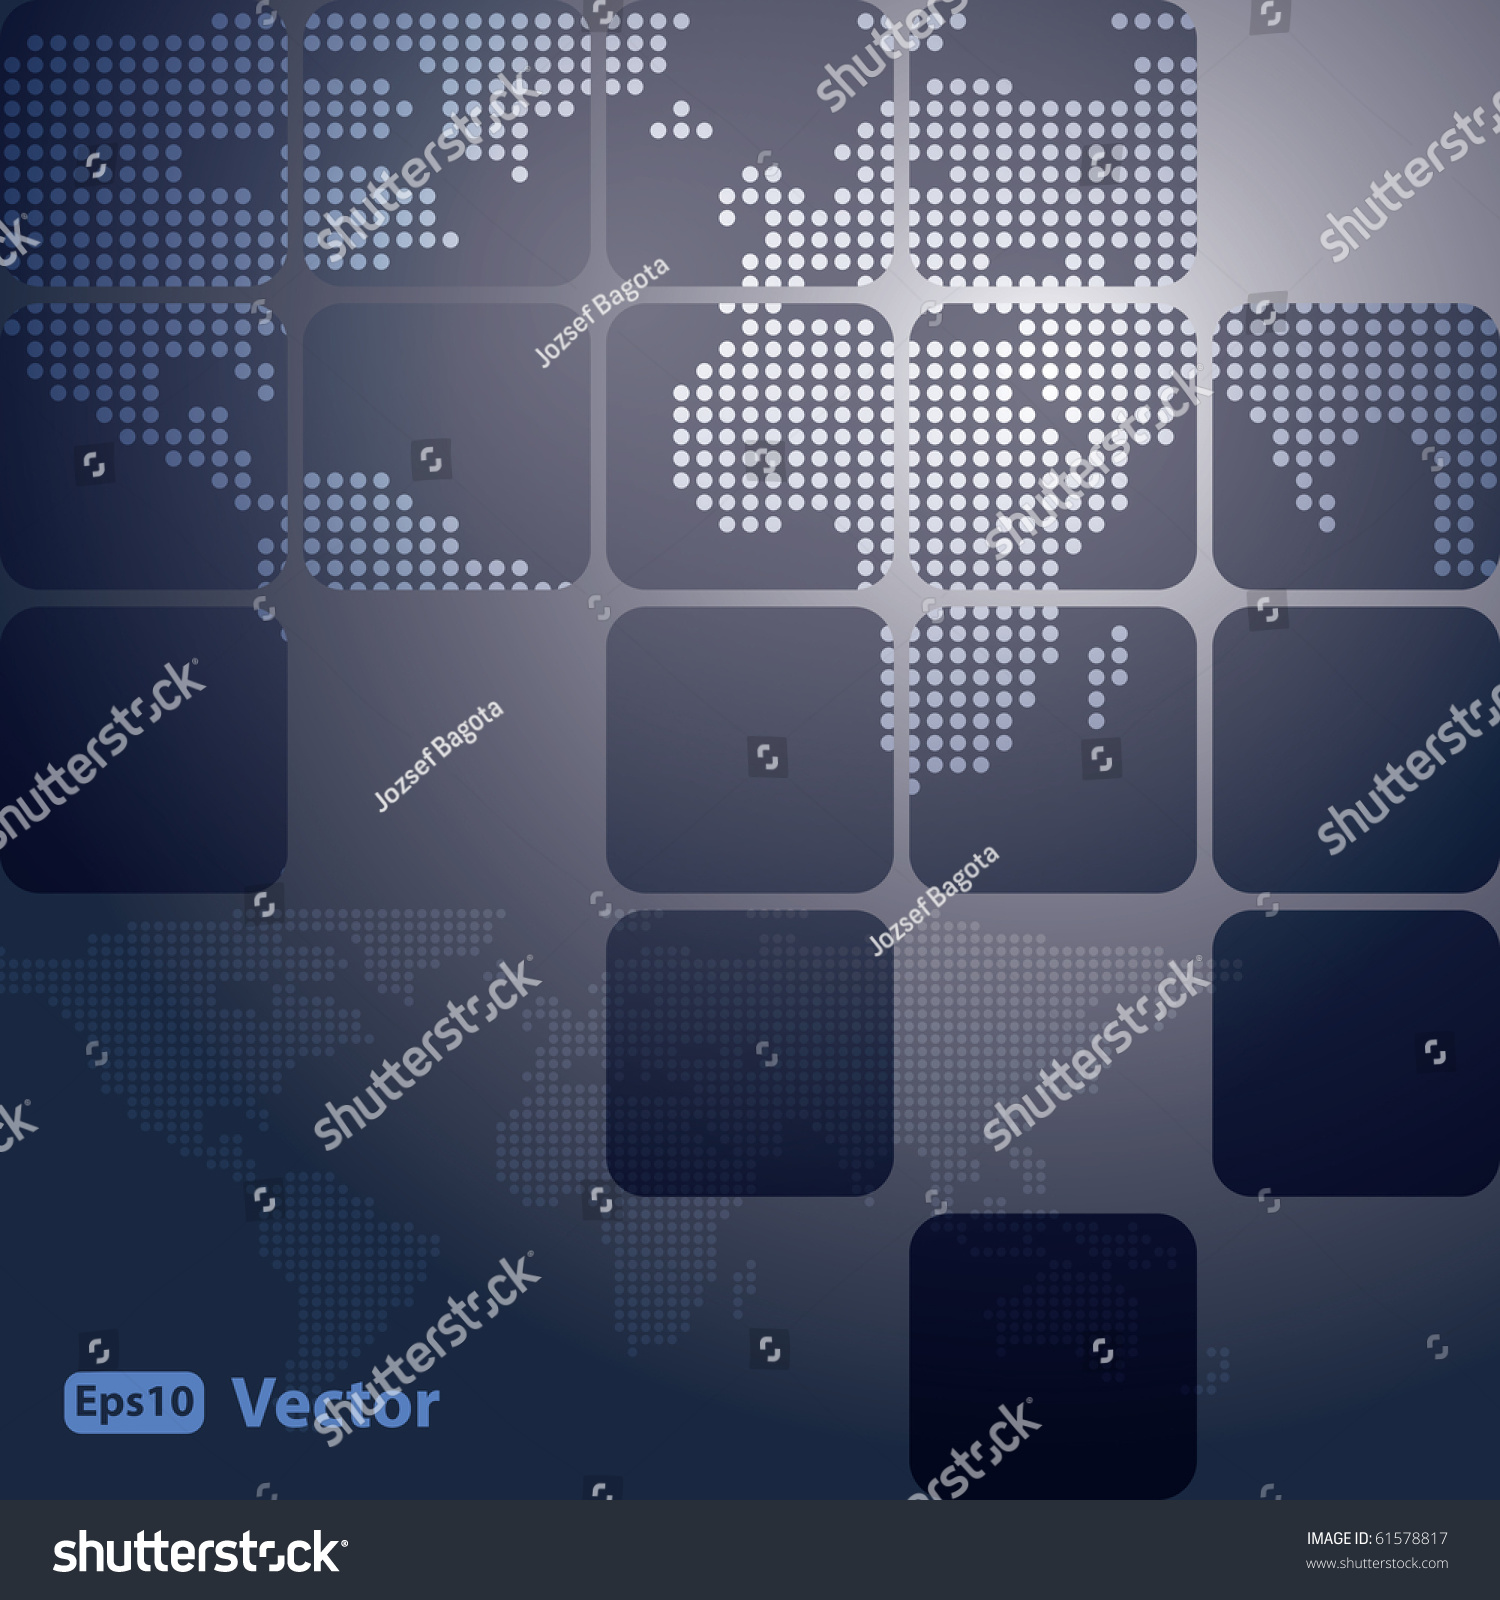 Map Vector Background - 61578817 : Shutterstock